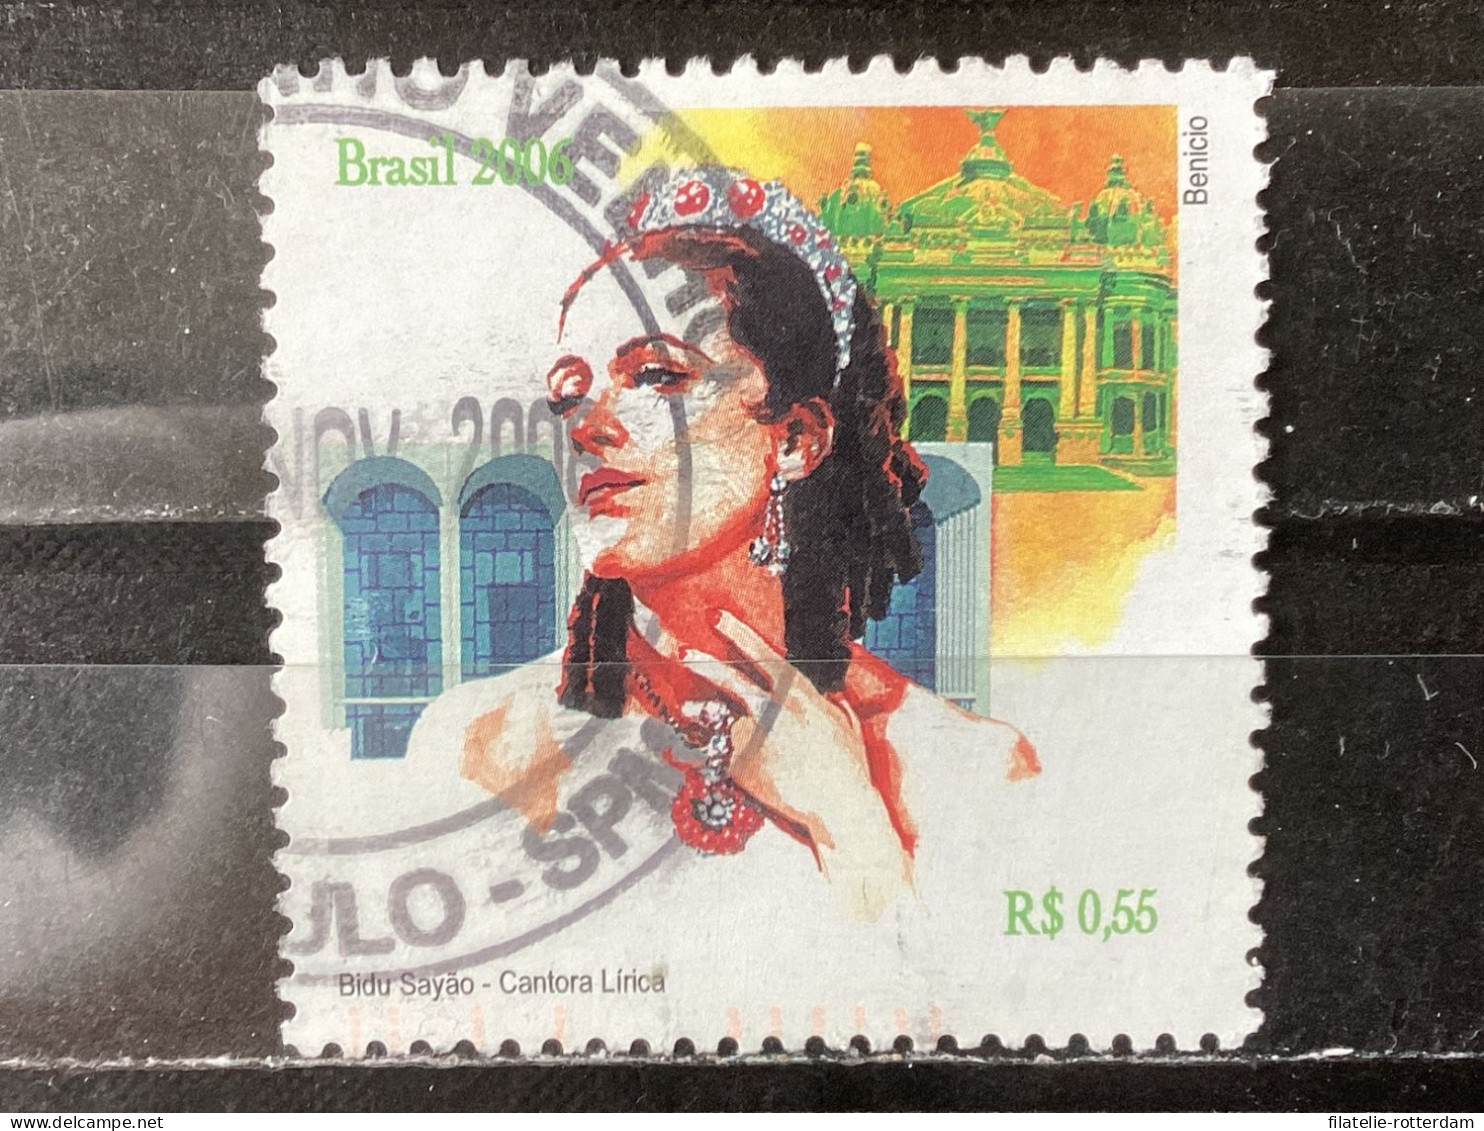 Brazil / Brazilië - Opera Singer (0.55) 2006 - Used Stamps